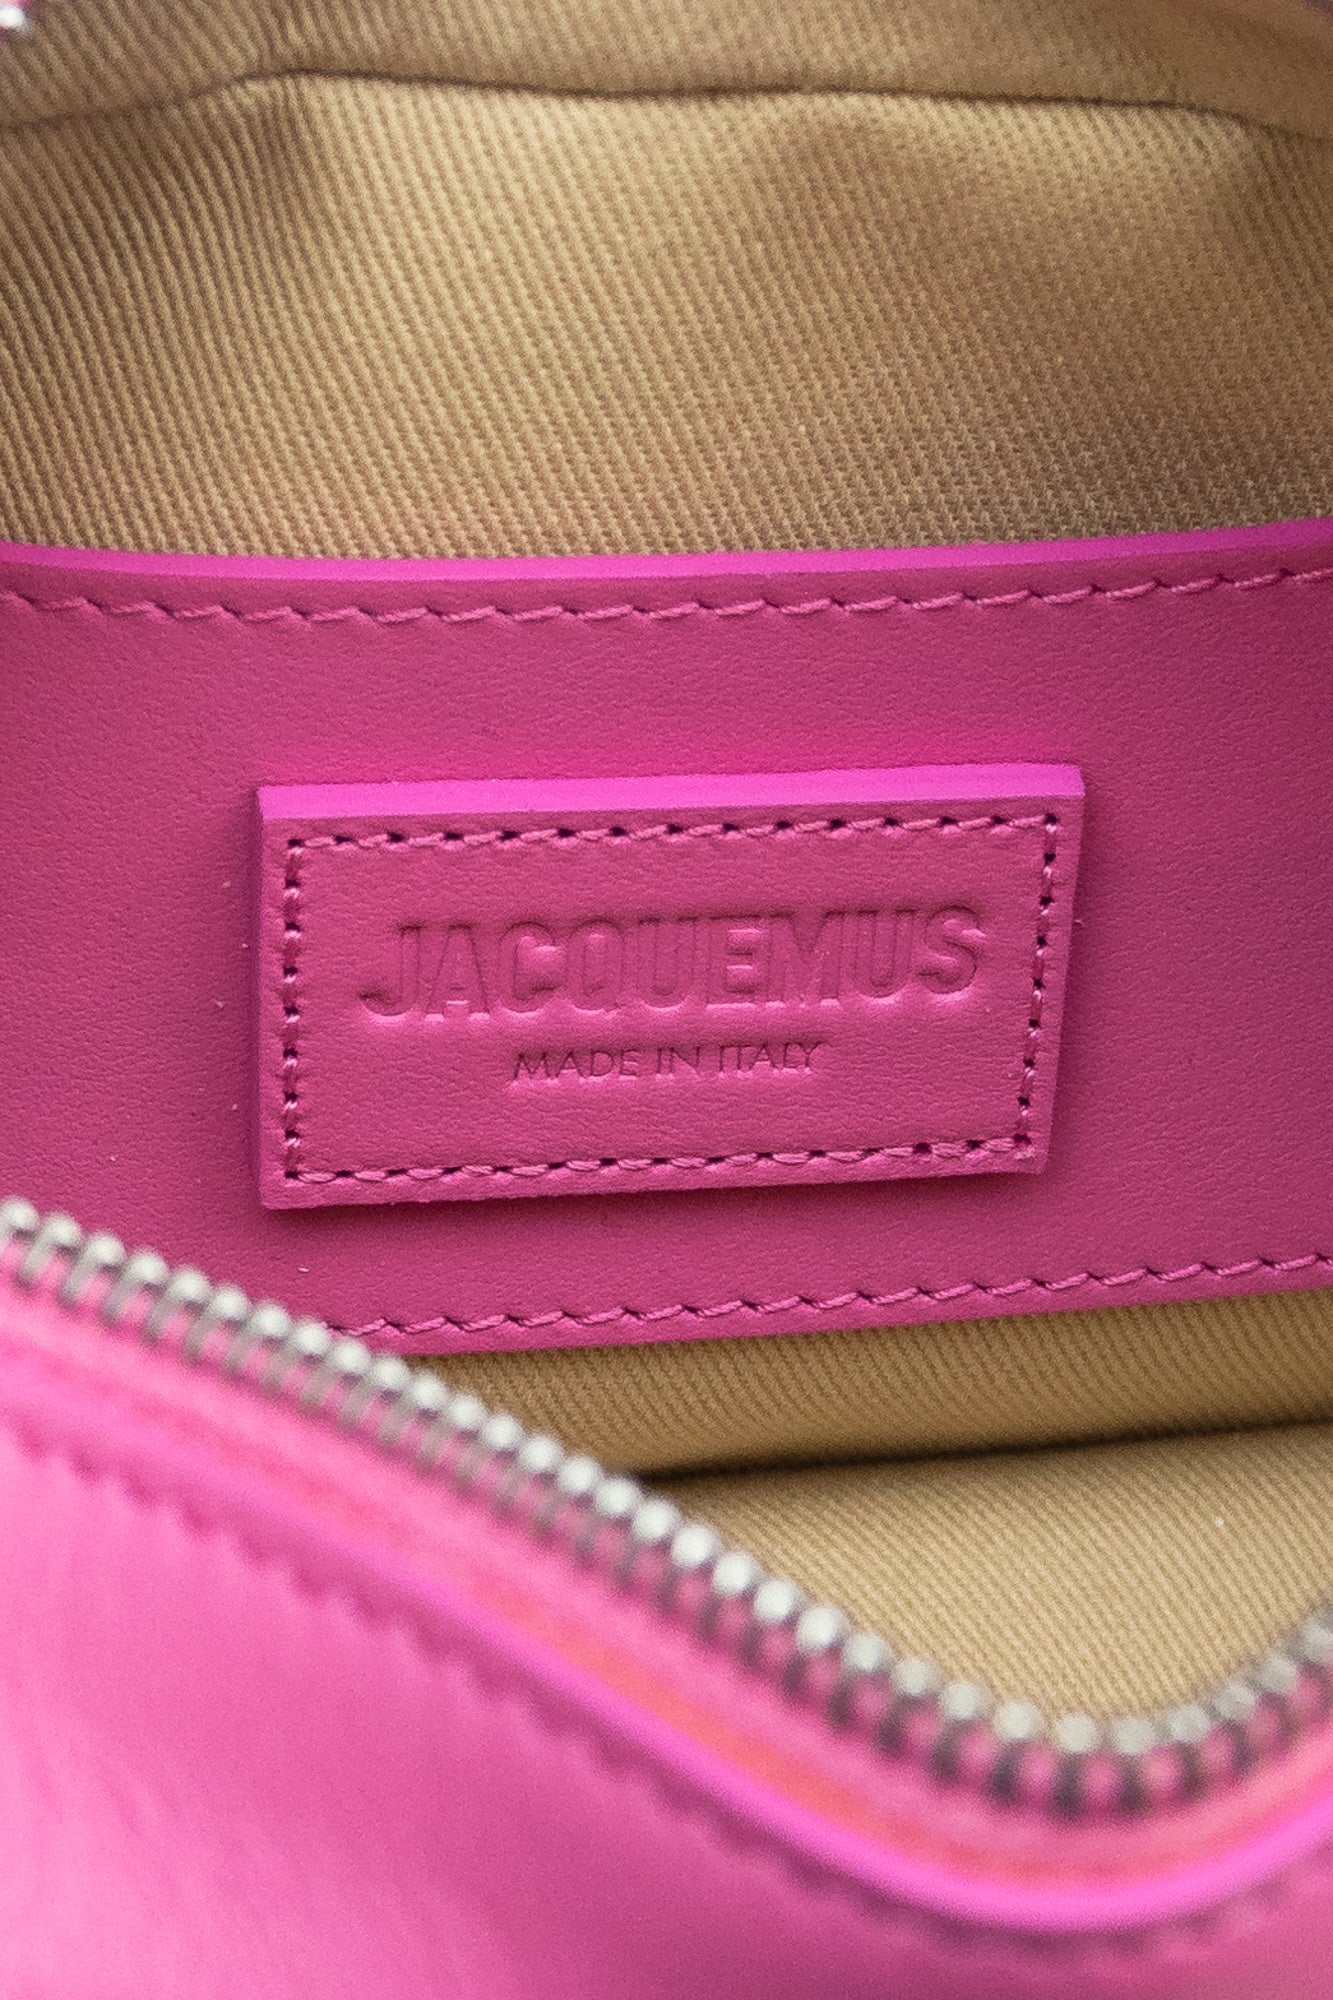 Pink Le Baneto Leather Crossbody Bag